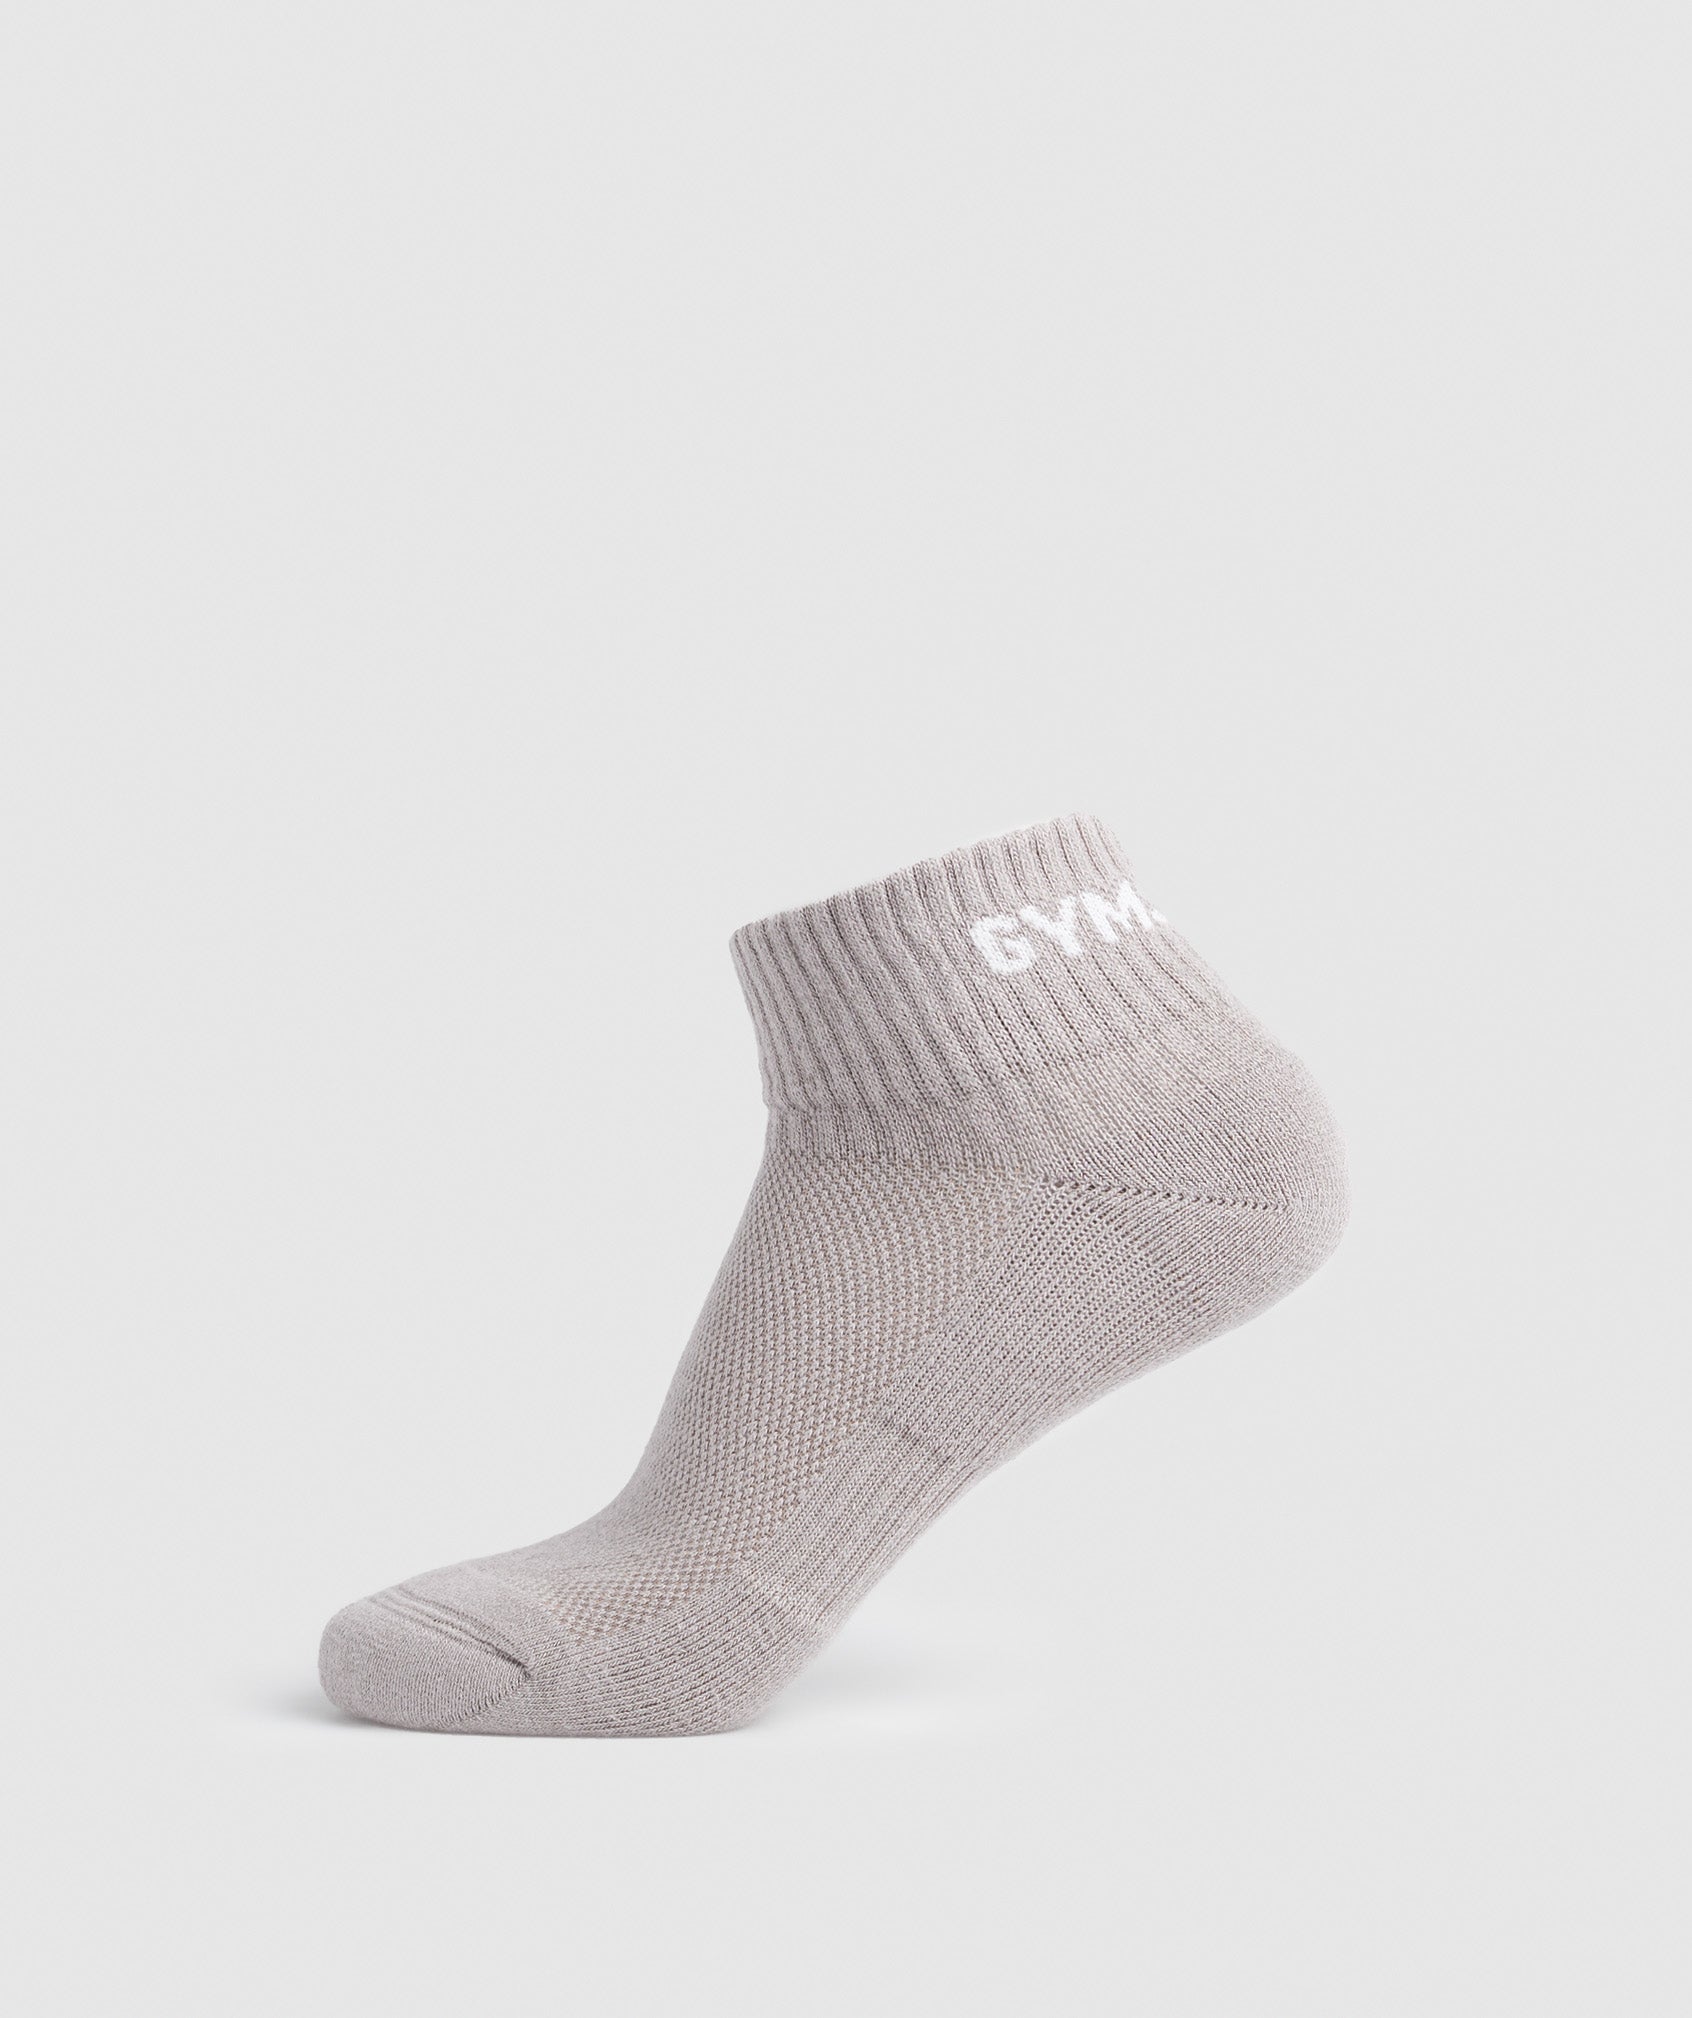 Jacquard Quarter Socks 3pk in Olive/White/Modern Blush Pink - view 6